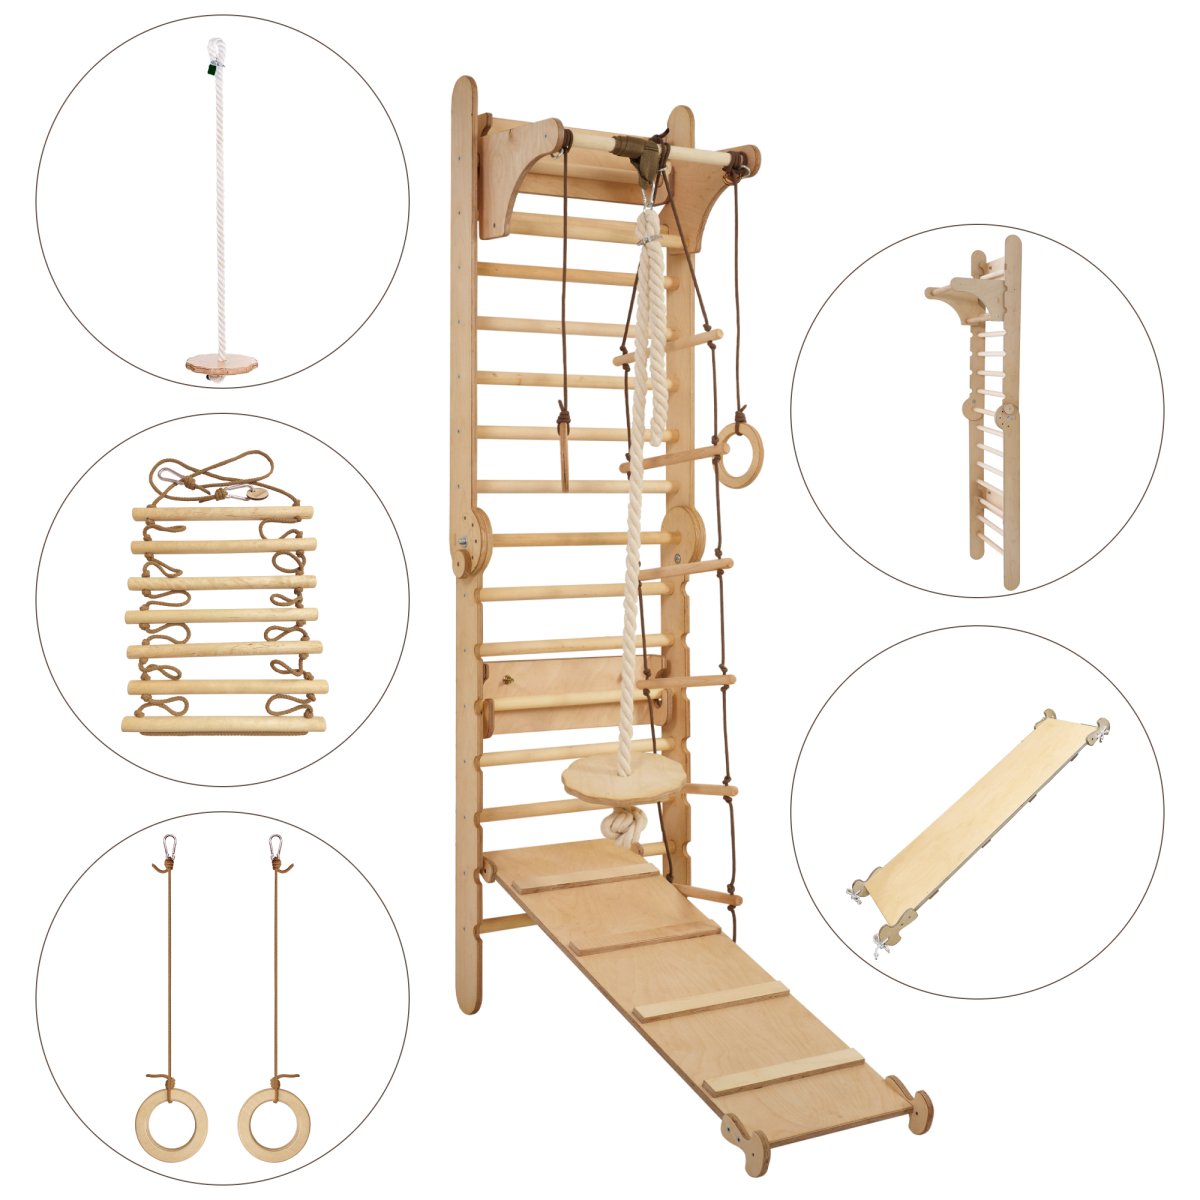 3in1 Wooden Swedish Wall / Climbing ladder for Children + Swing Set + Slide Board by Goodevas